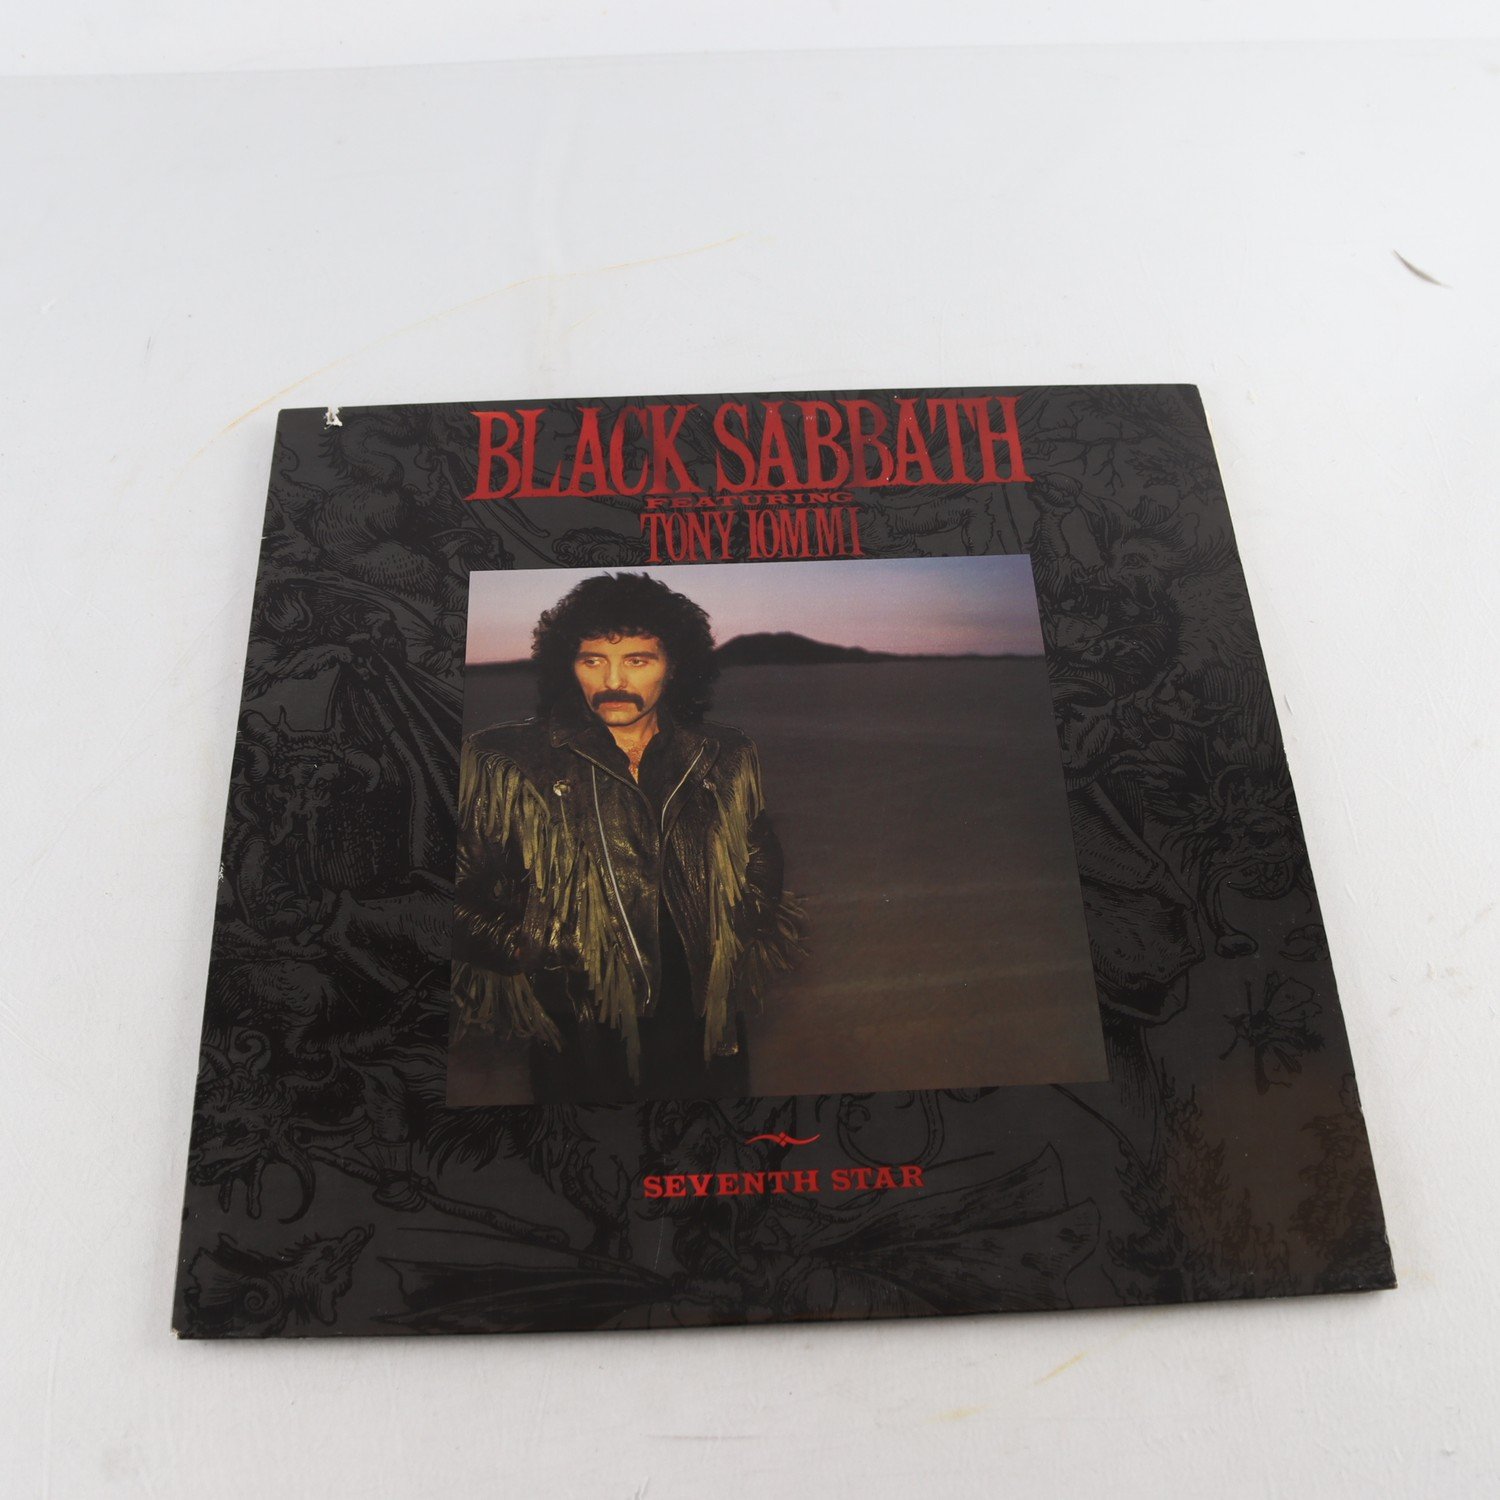 LP Black Sabbath Featuring Tony Iommi , Seventh Star